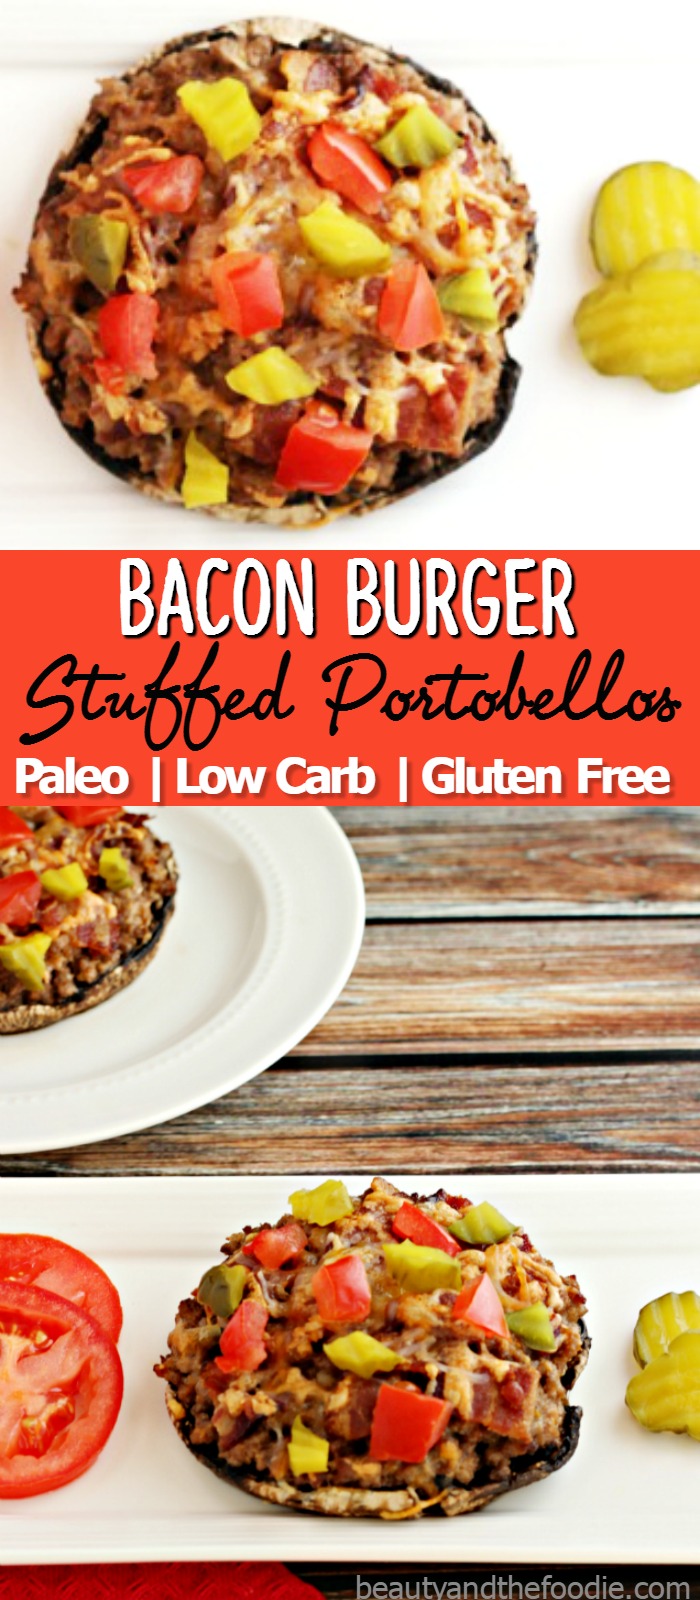 Bacon Burger Stuffed Portobellos- Plaeo, Low Carb and Gluten Free